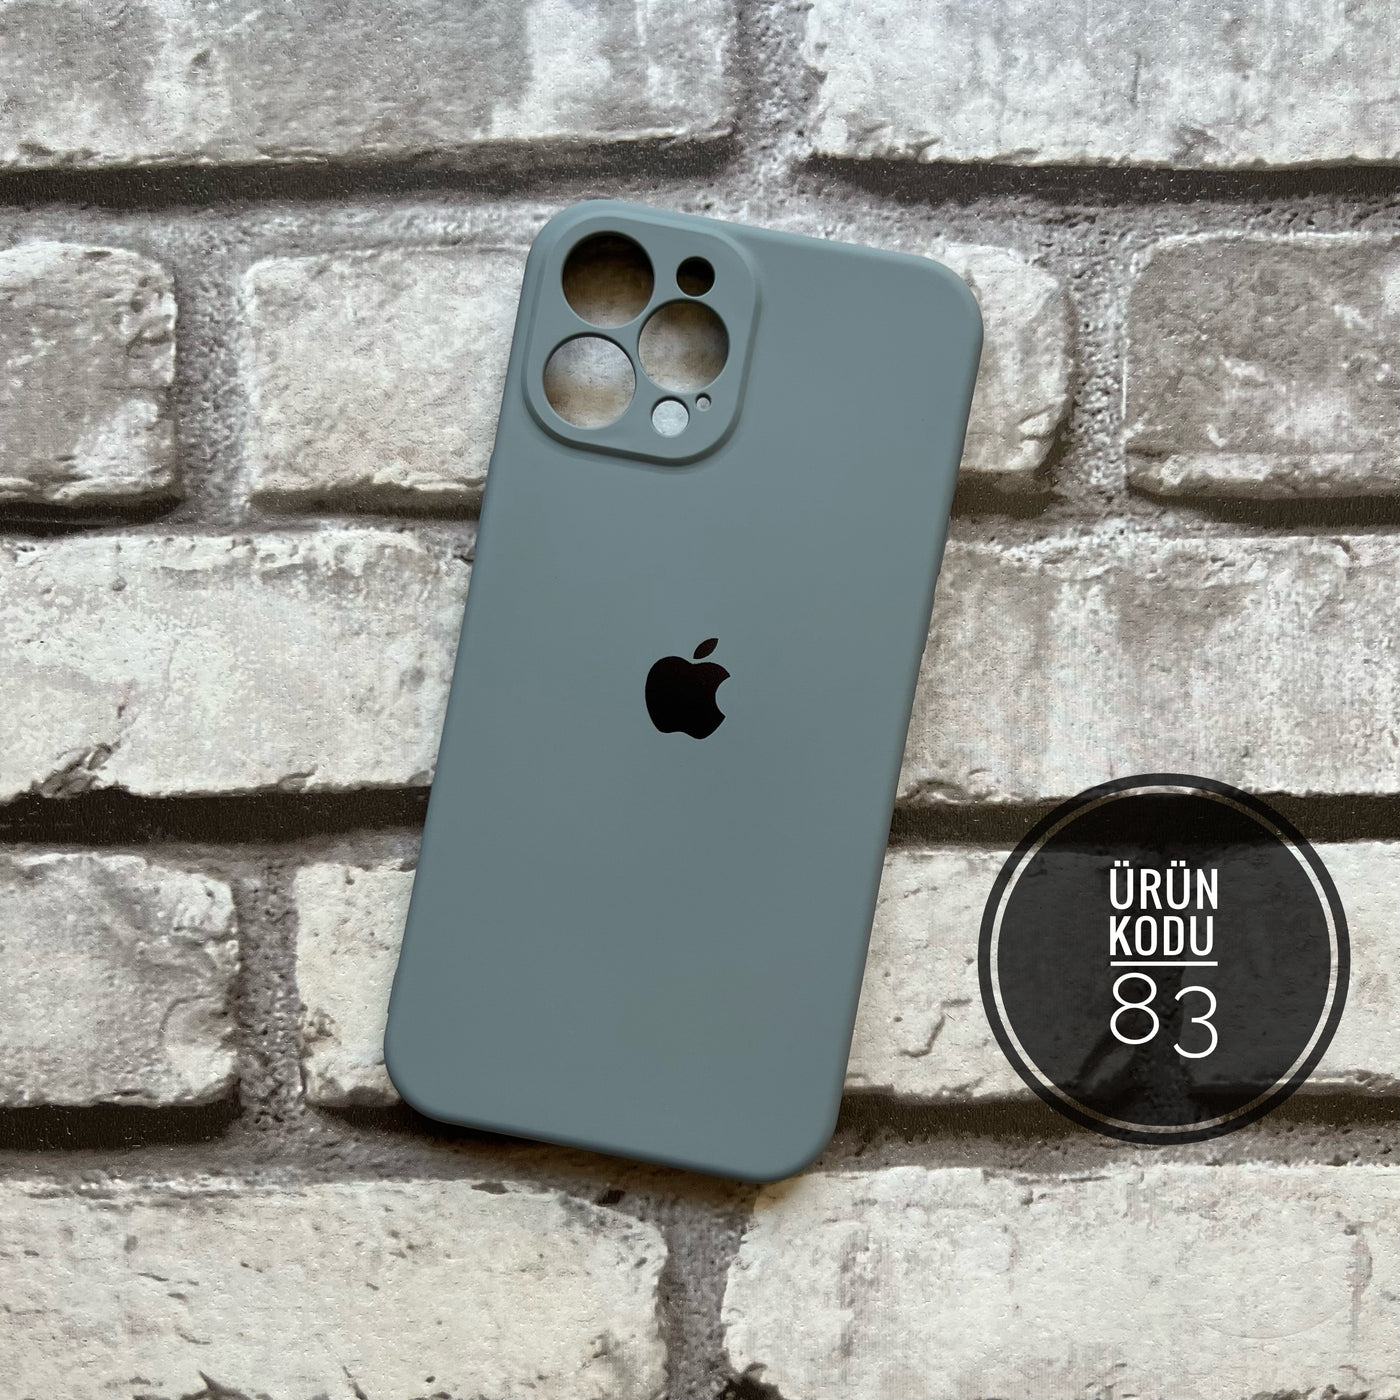 iPhone 12 PRO MAX Logolu Silikon ( 5 AL 2 ÖDE )